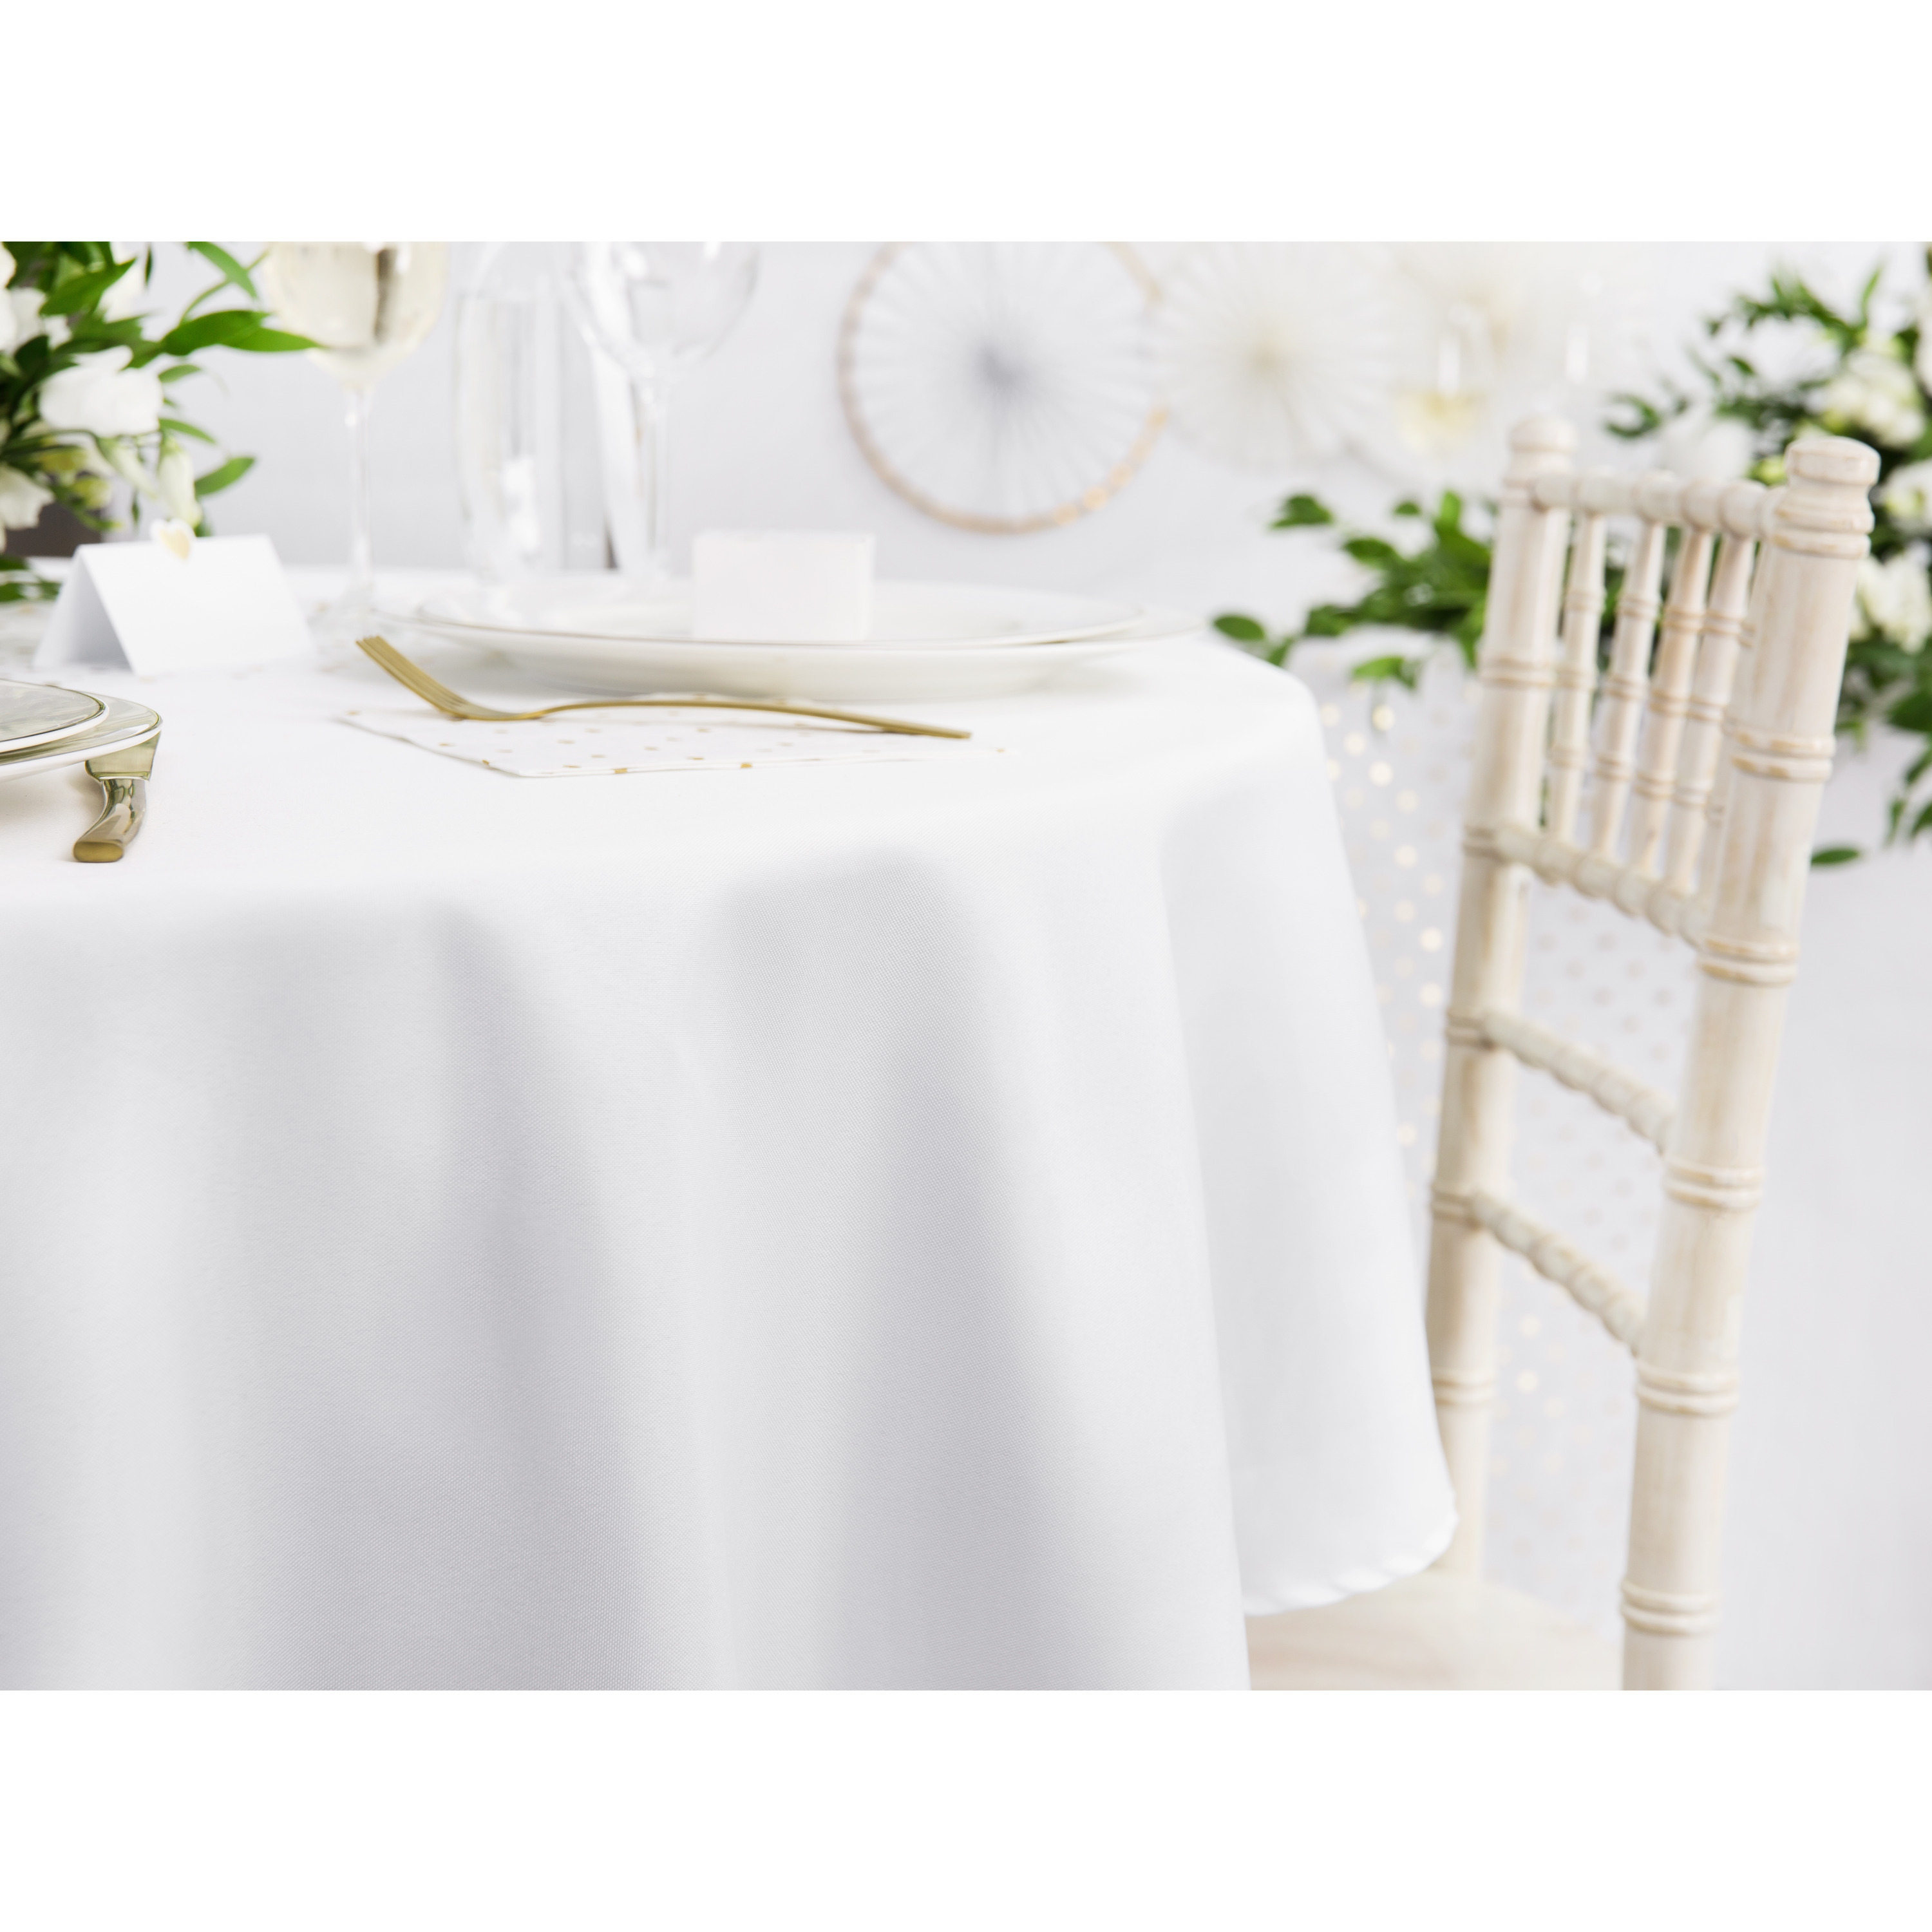 PartyDeco Tafelkleed/tafellaken rond - wit - 280 cm - polyester - Bruiloft tafelkleden -